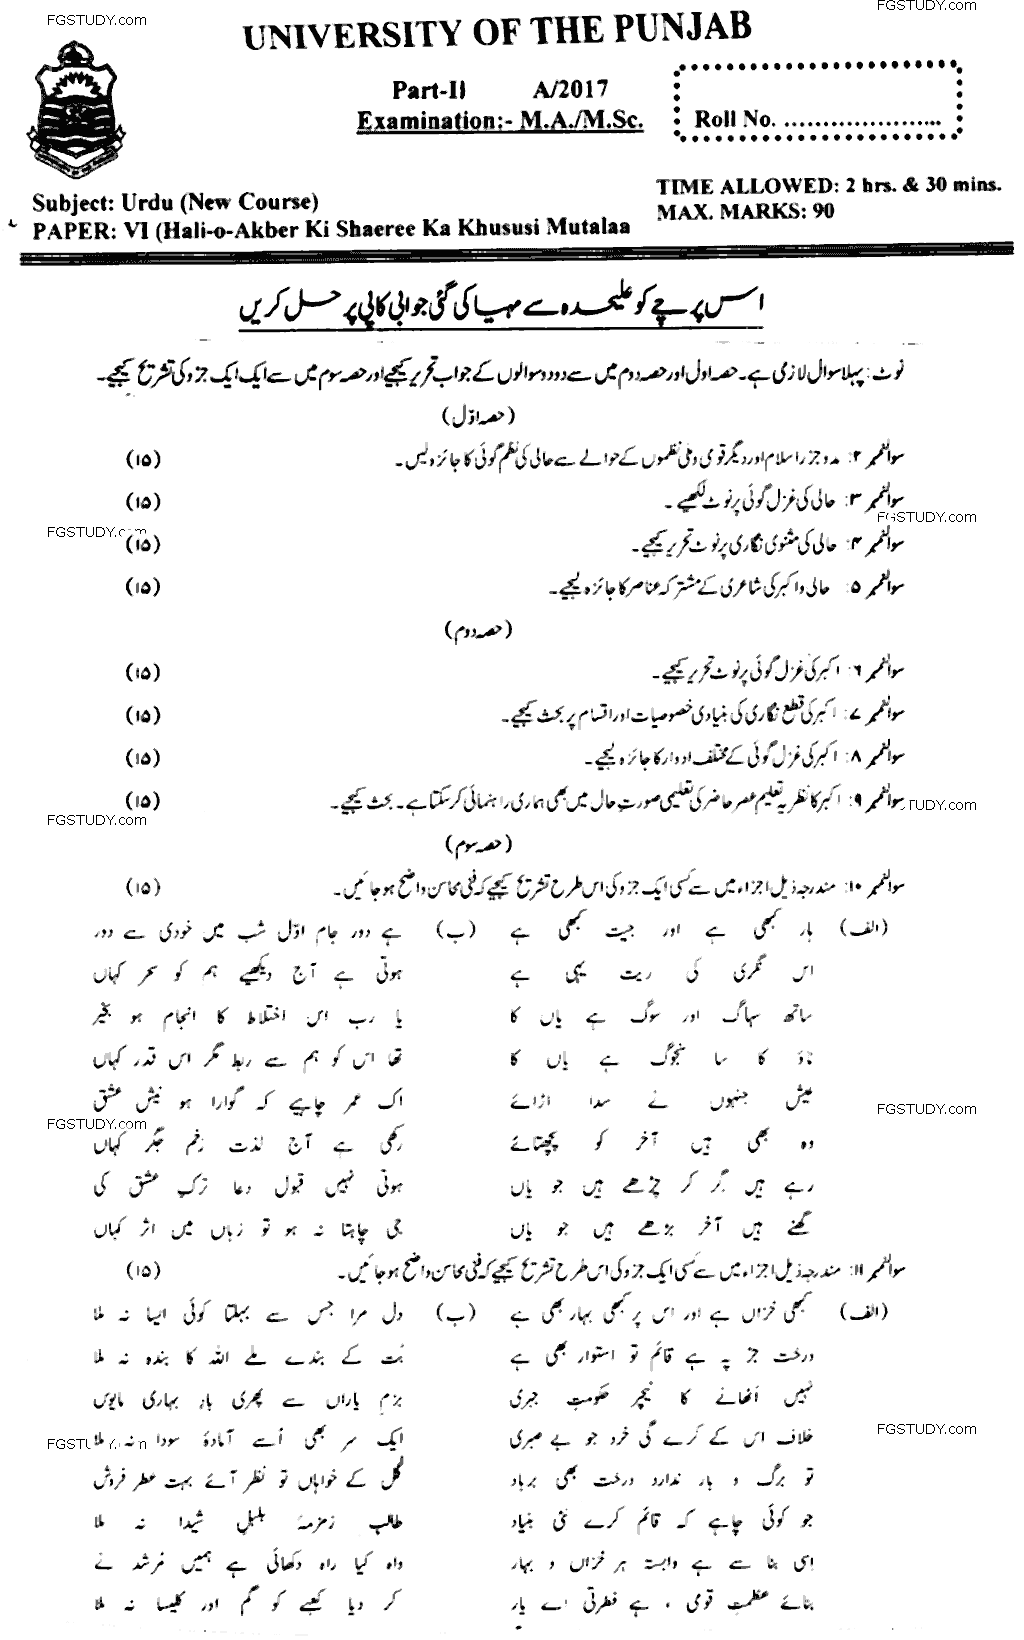 MA Part 2 Urdu Hali O Akber Ki Shaeree Ka Khususi Mutalaa Past Paper 2017 Punjab University Subjective